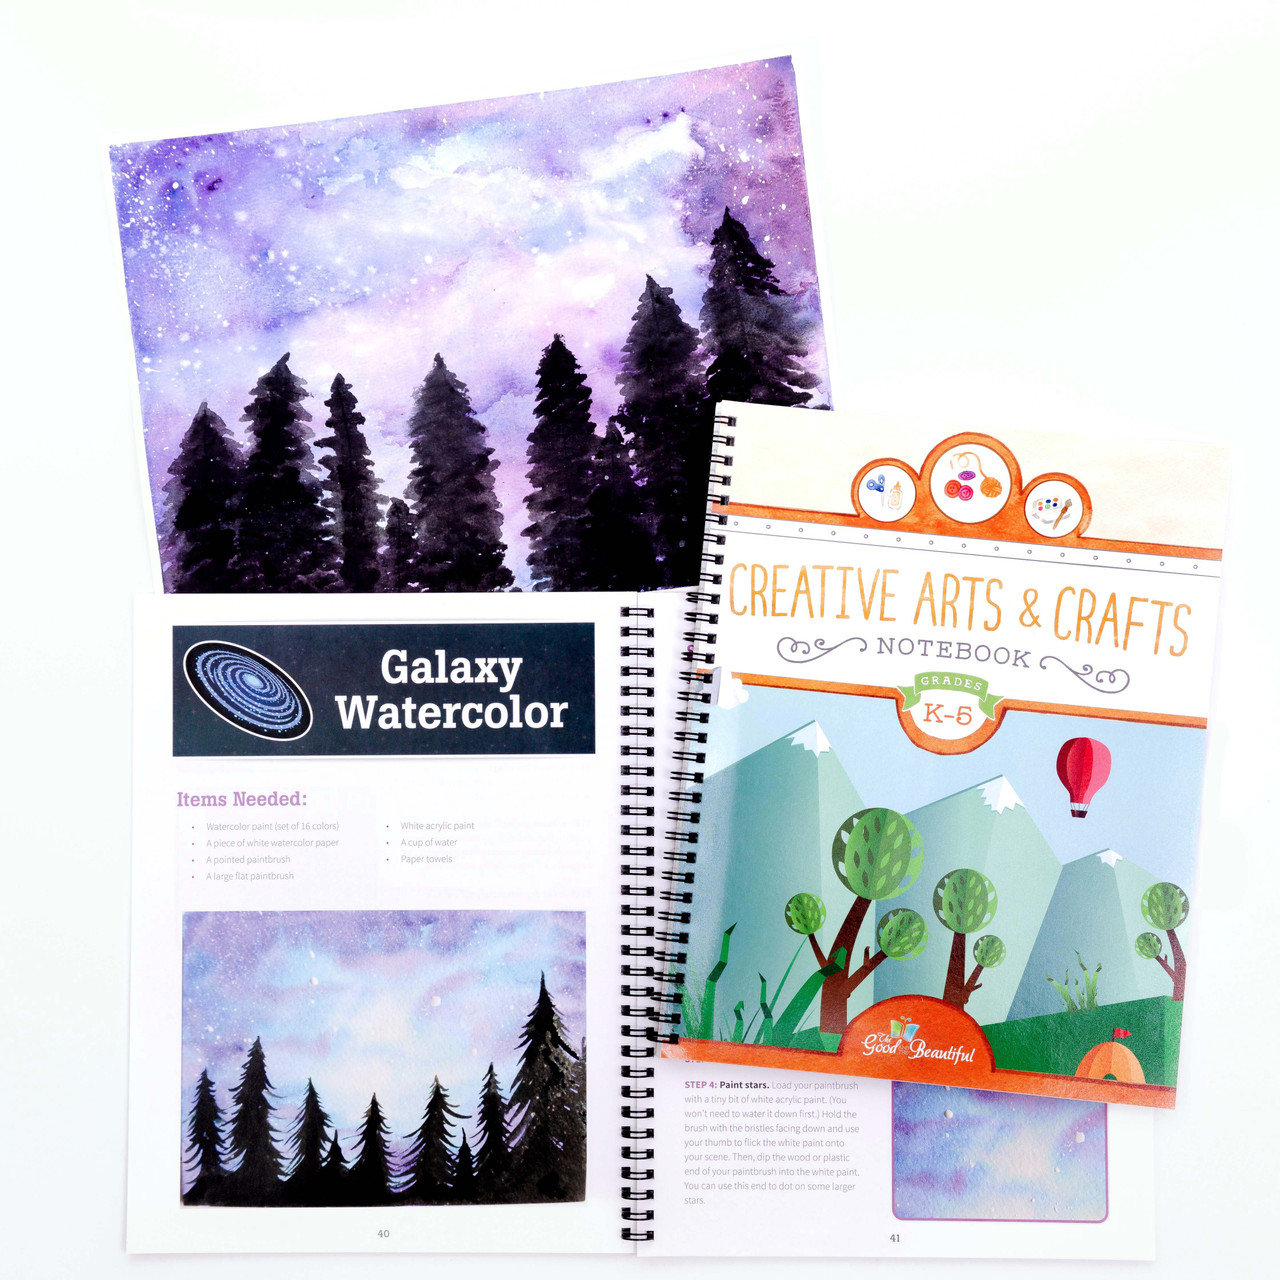 Creative Arts & Crafts Notebook